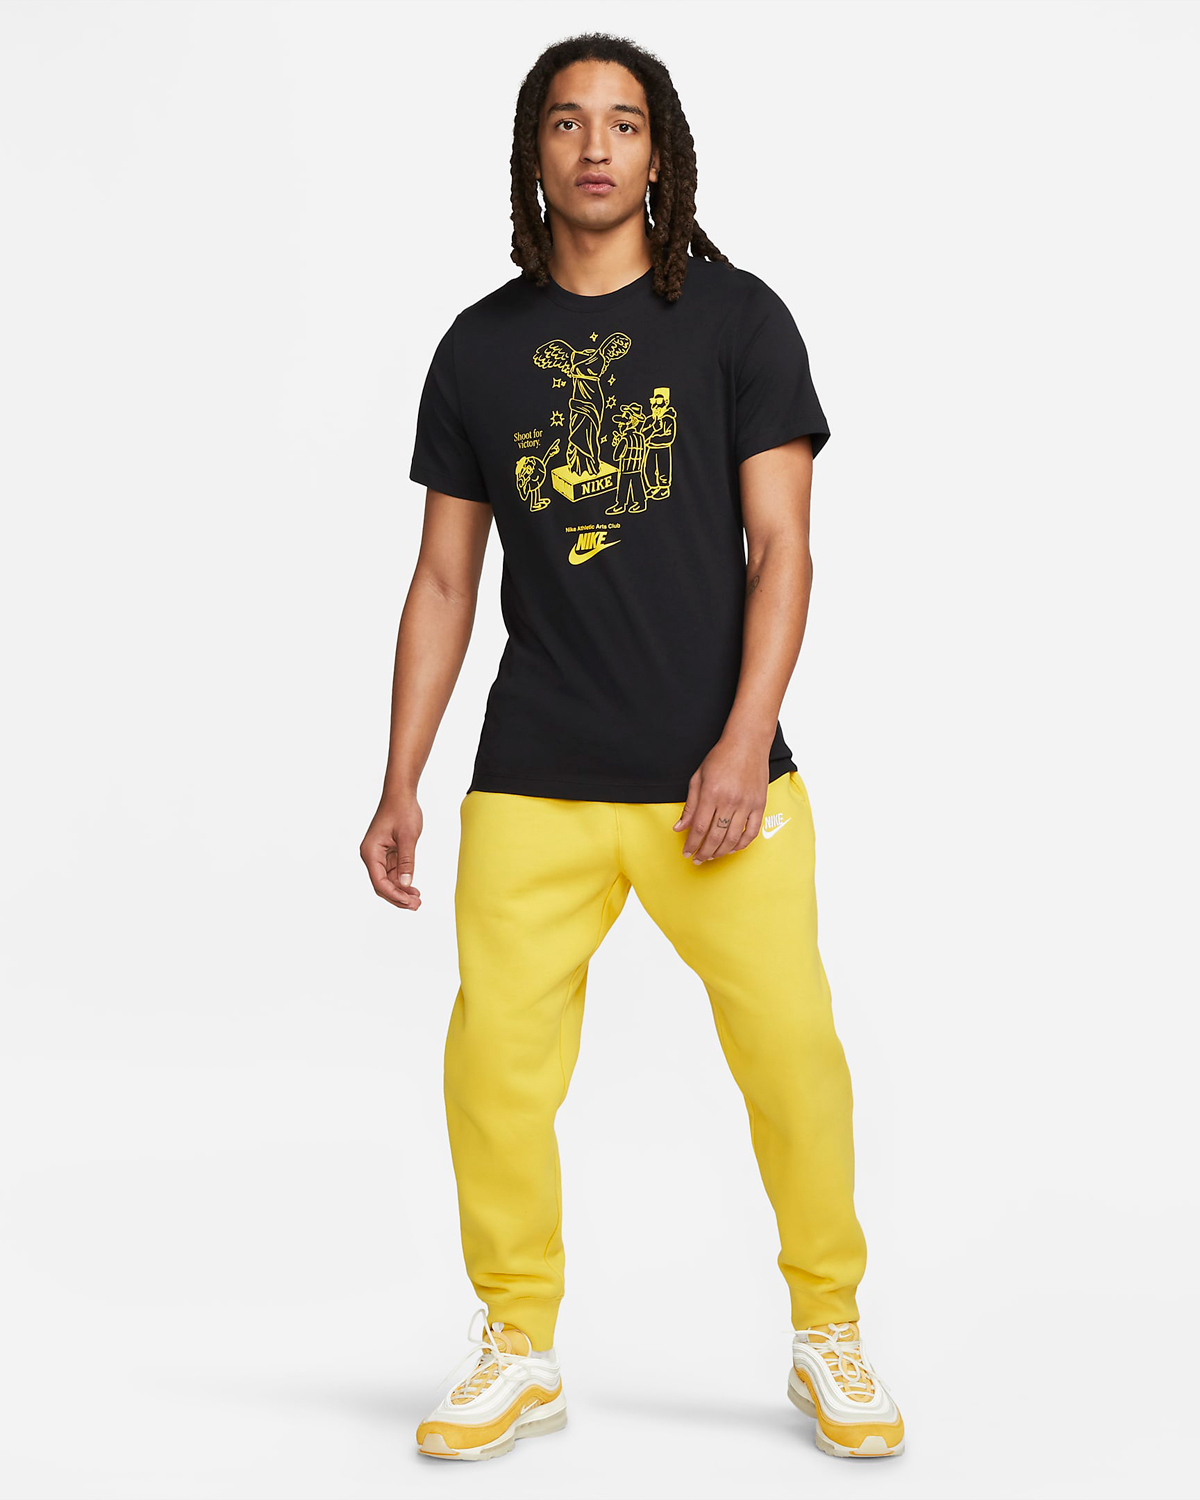 Nike-Sportswear-T-Shirt-Pants-Outfit-Opti-Yellow